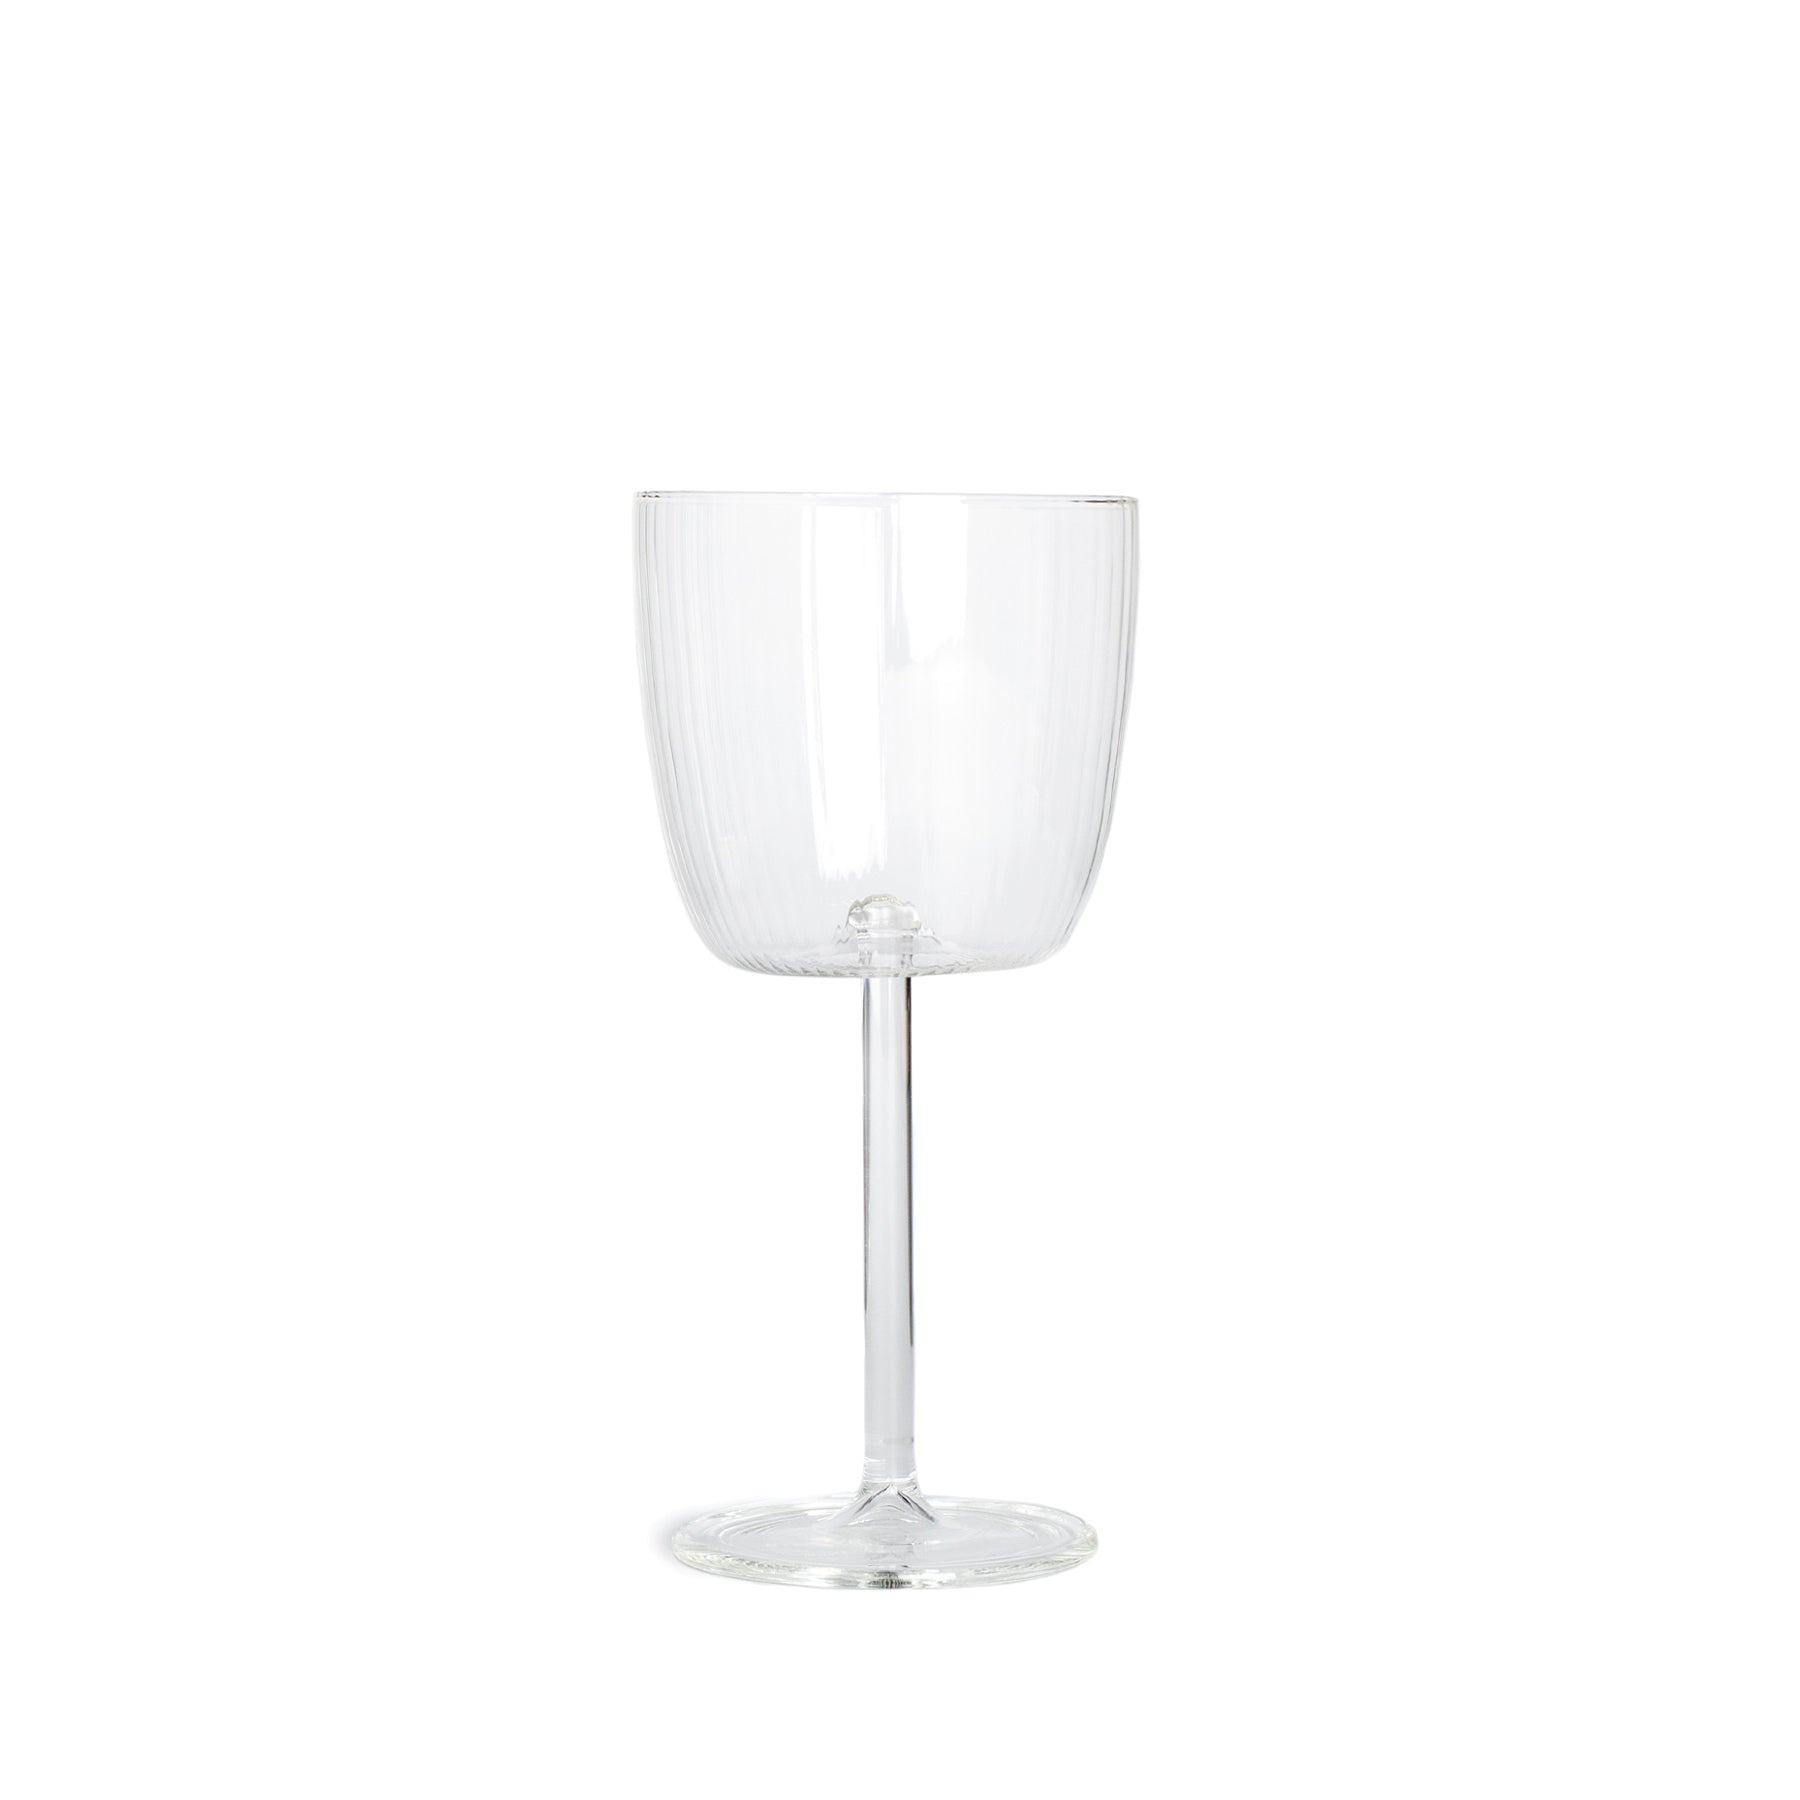 Tuccio Calice Stem Glass in Millerighe (Set of 2) Zoom Image 1